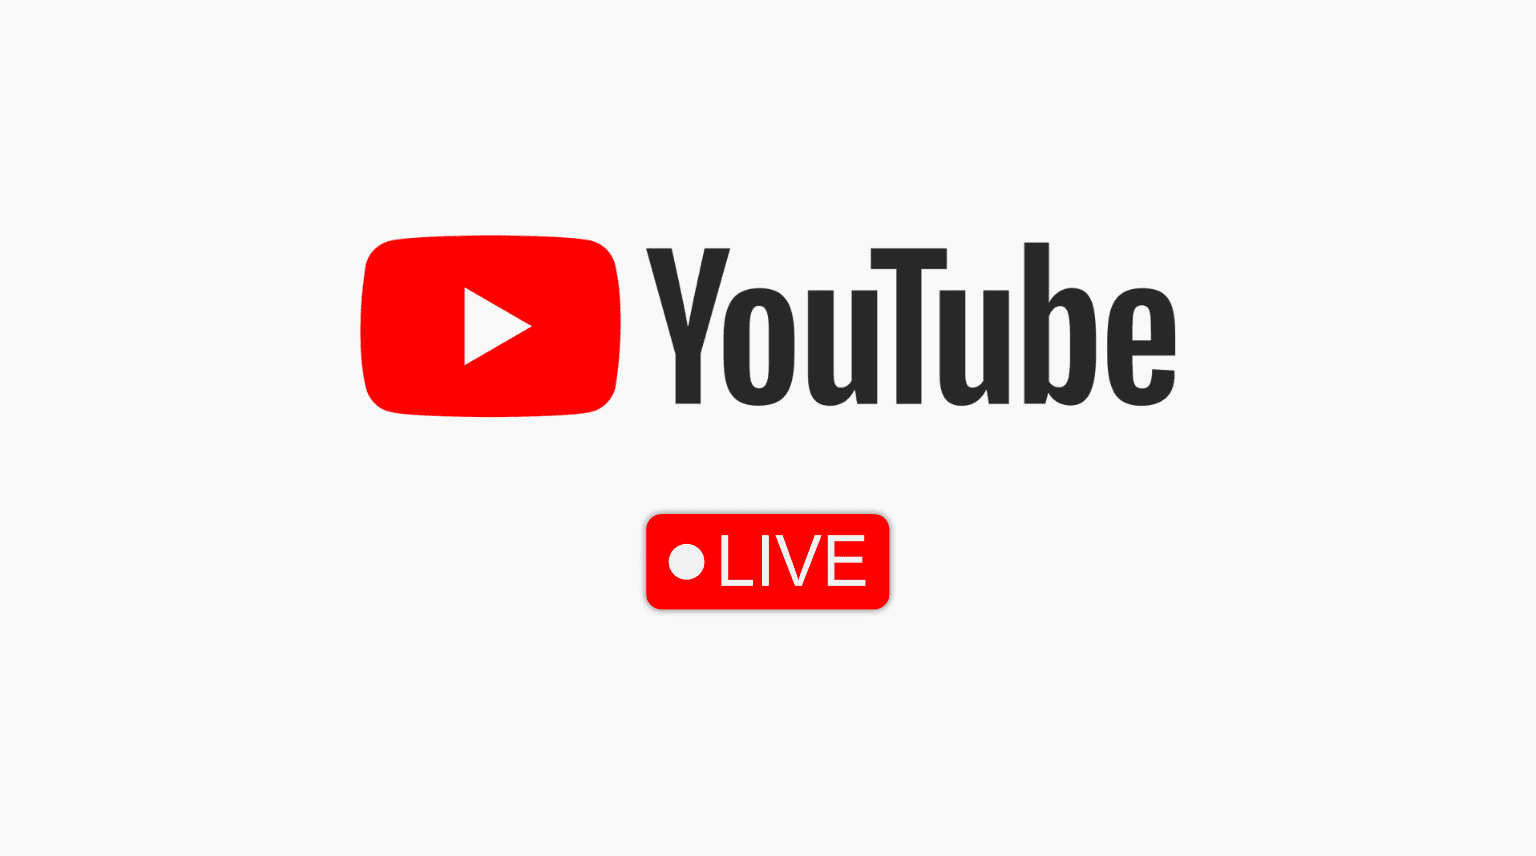 Live stream to YouTube